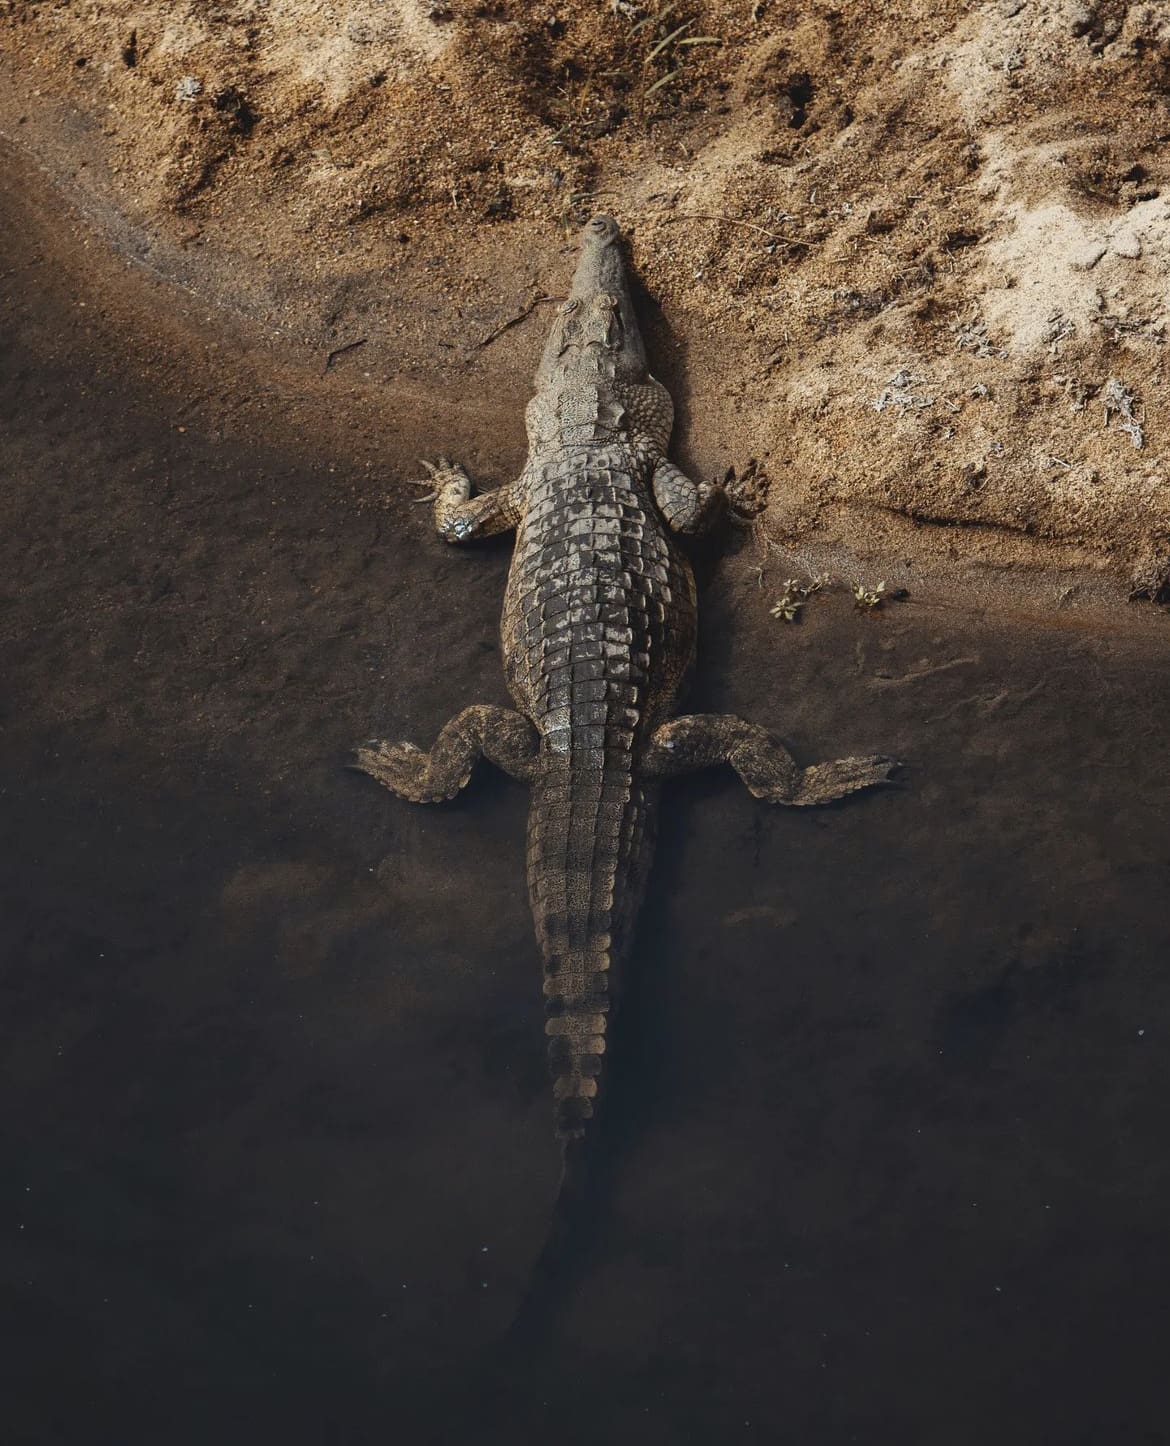 Nile Crocodile, Kruger